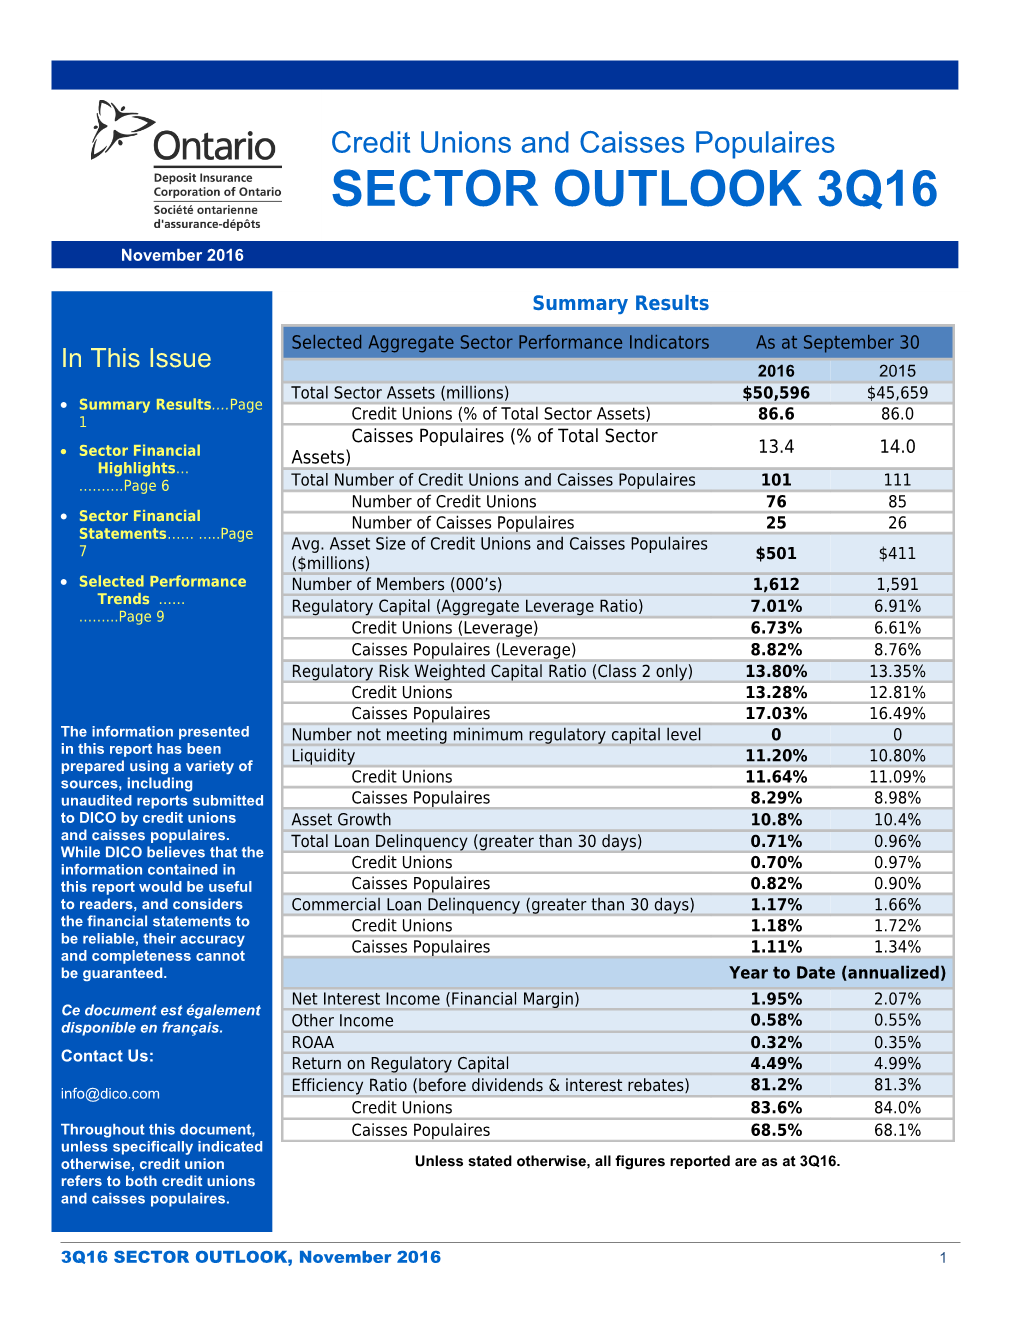 Sector Financial Highlights 3Q 2016